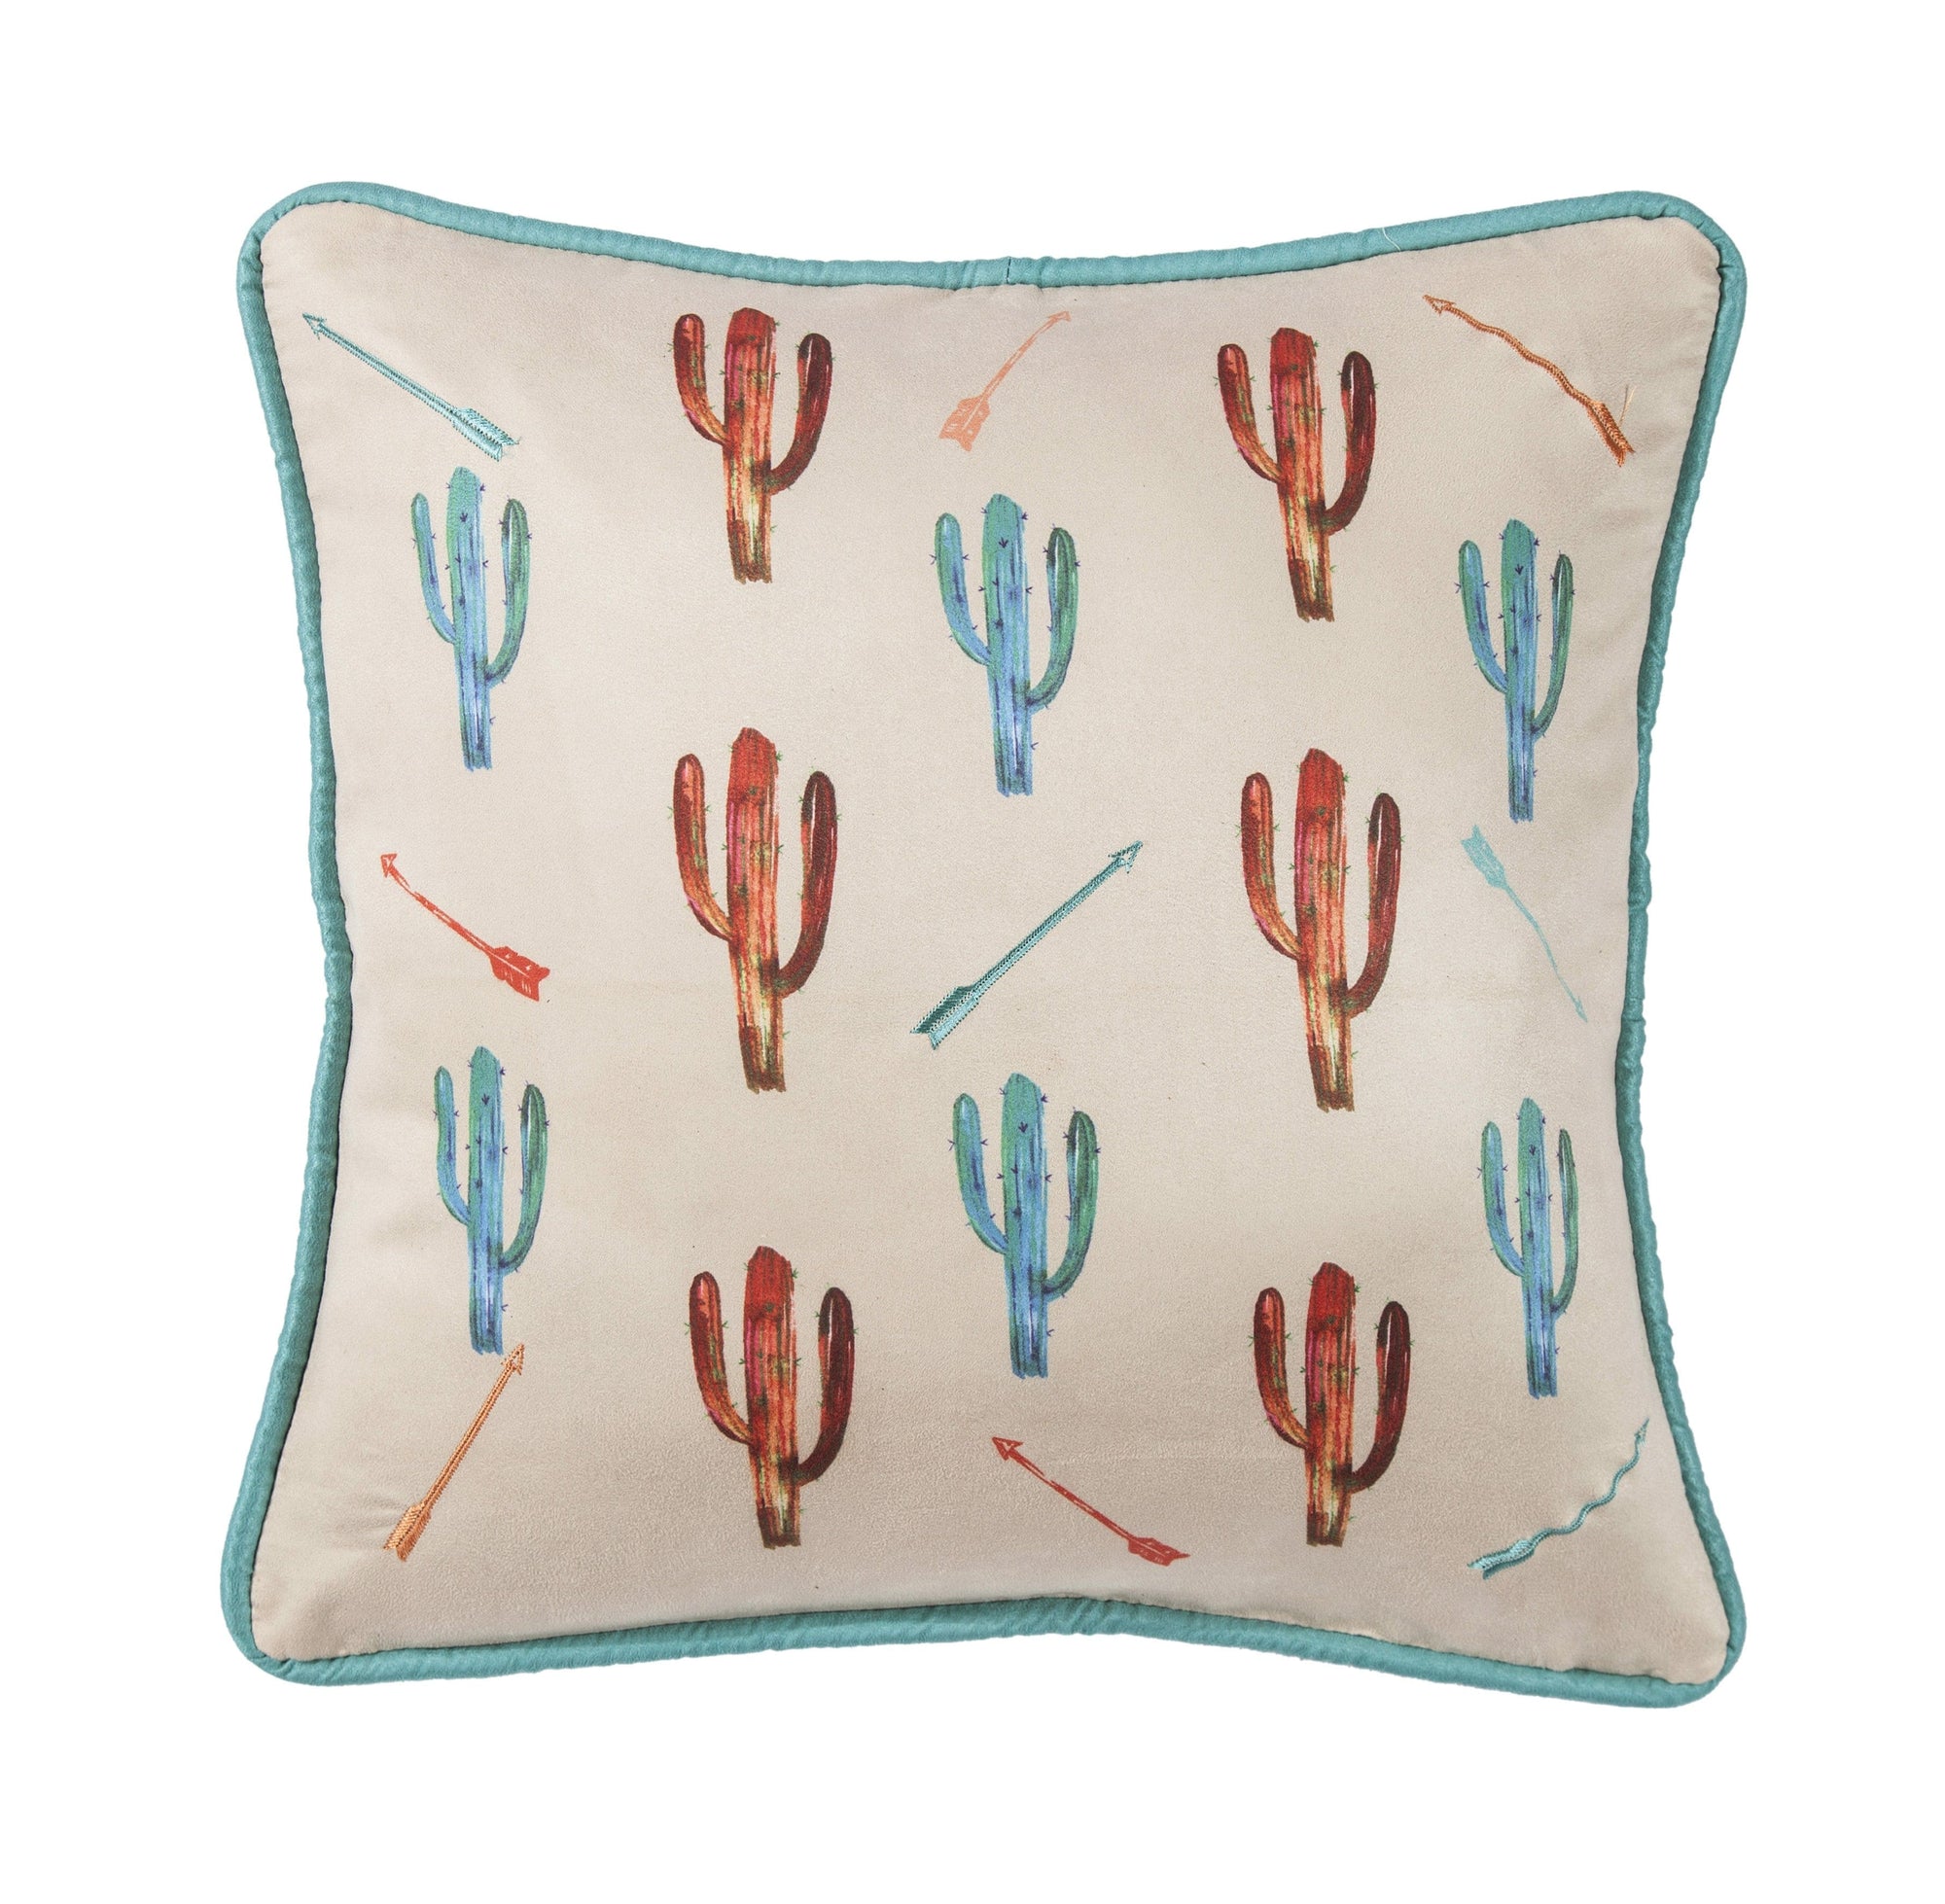 Serape Cactus Throw Pillow w/ Embroidery Details, 18x18 Pillow